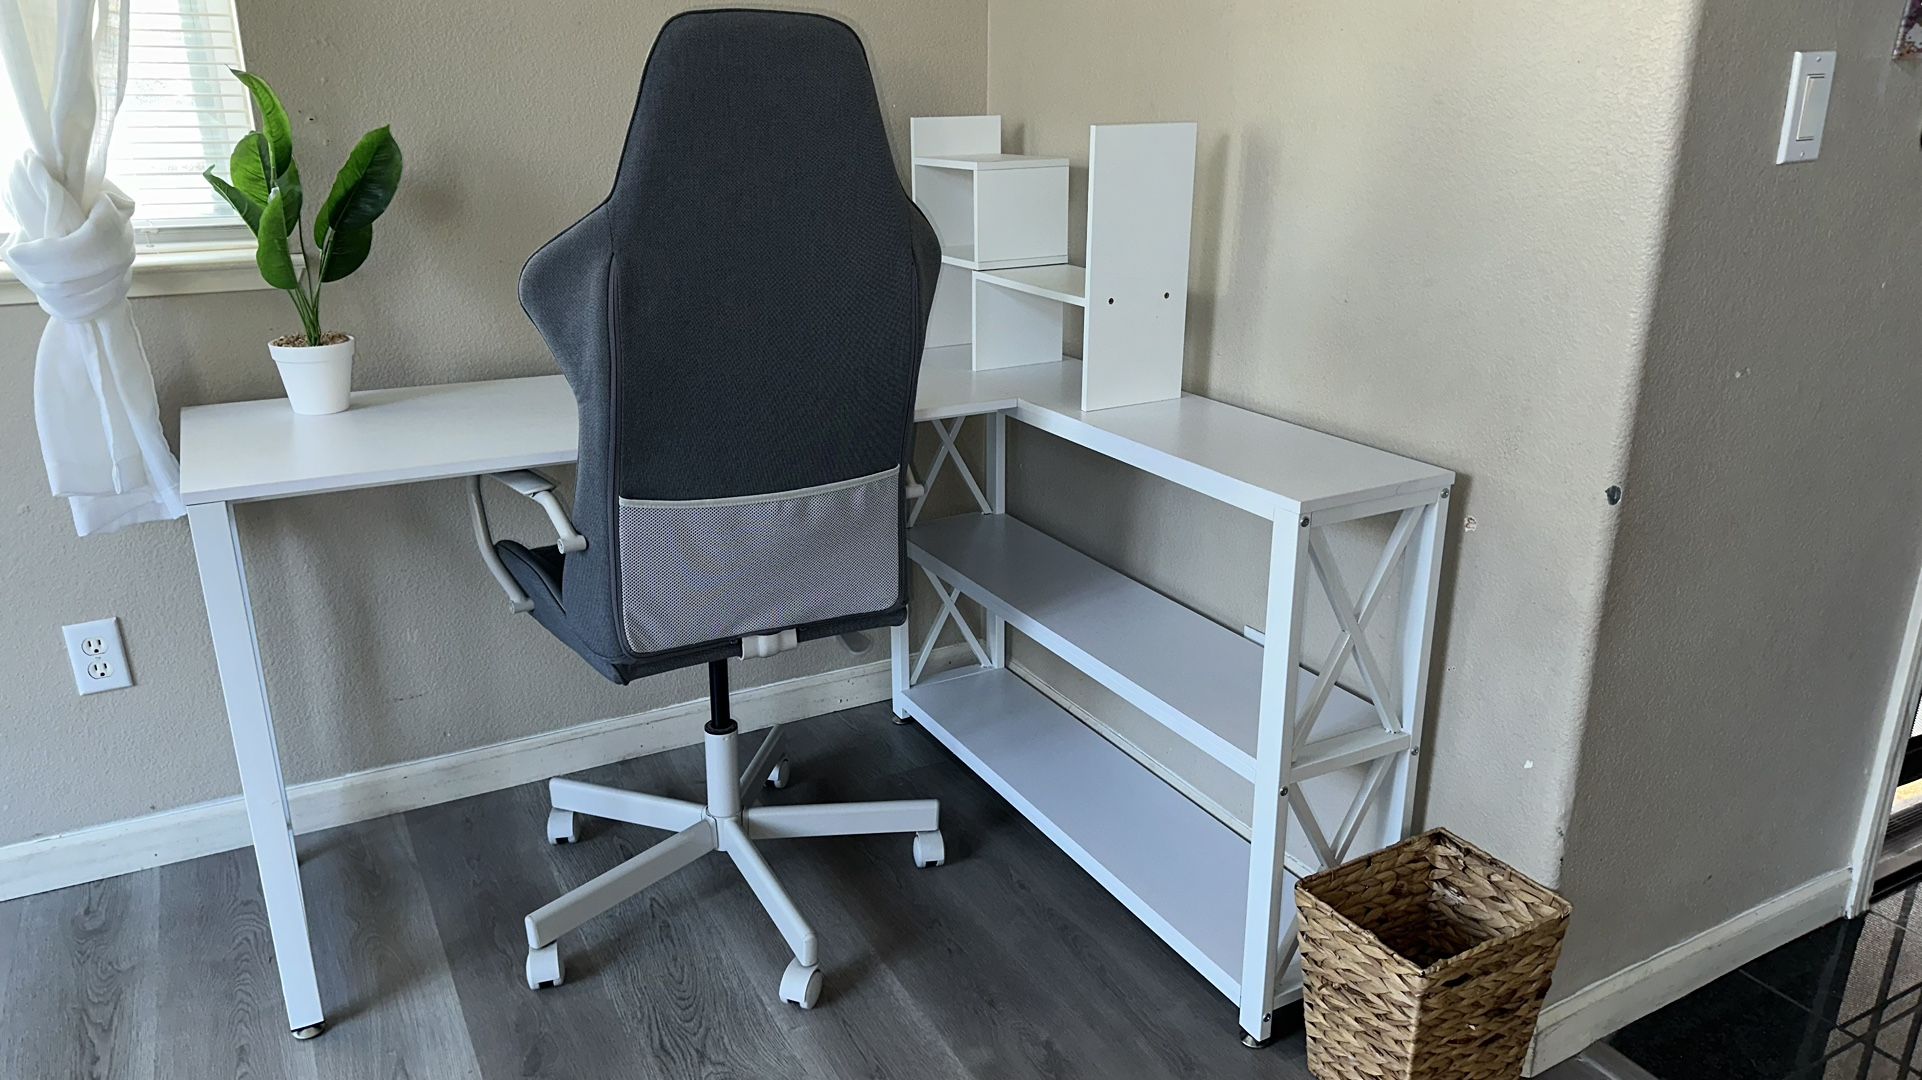 Desk & Chair 